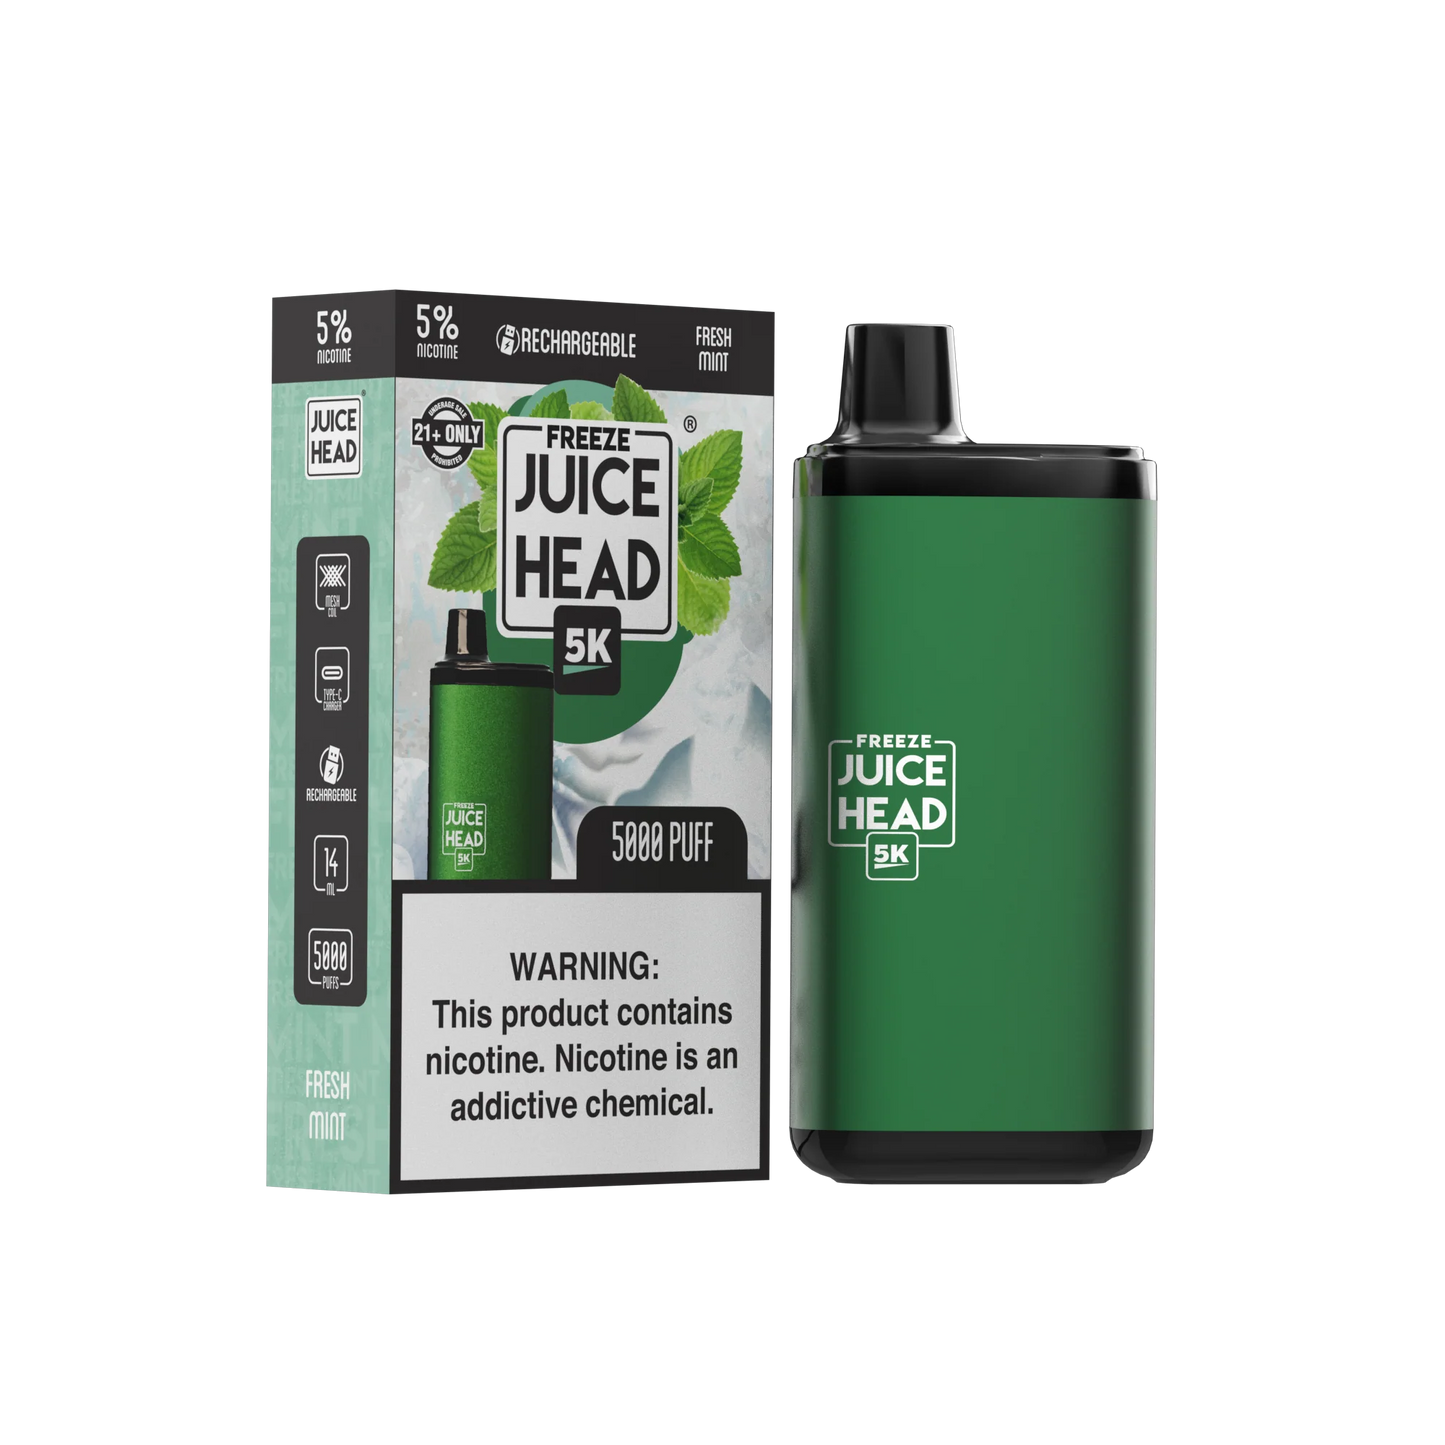 Juice Head 5k Disposable